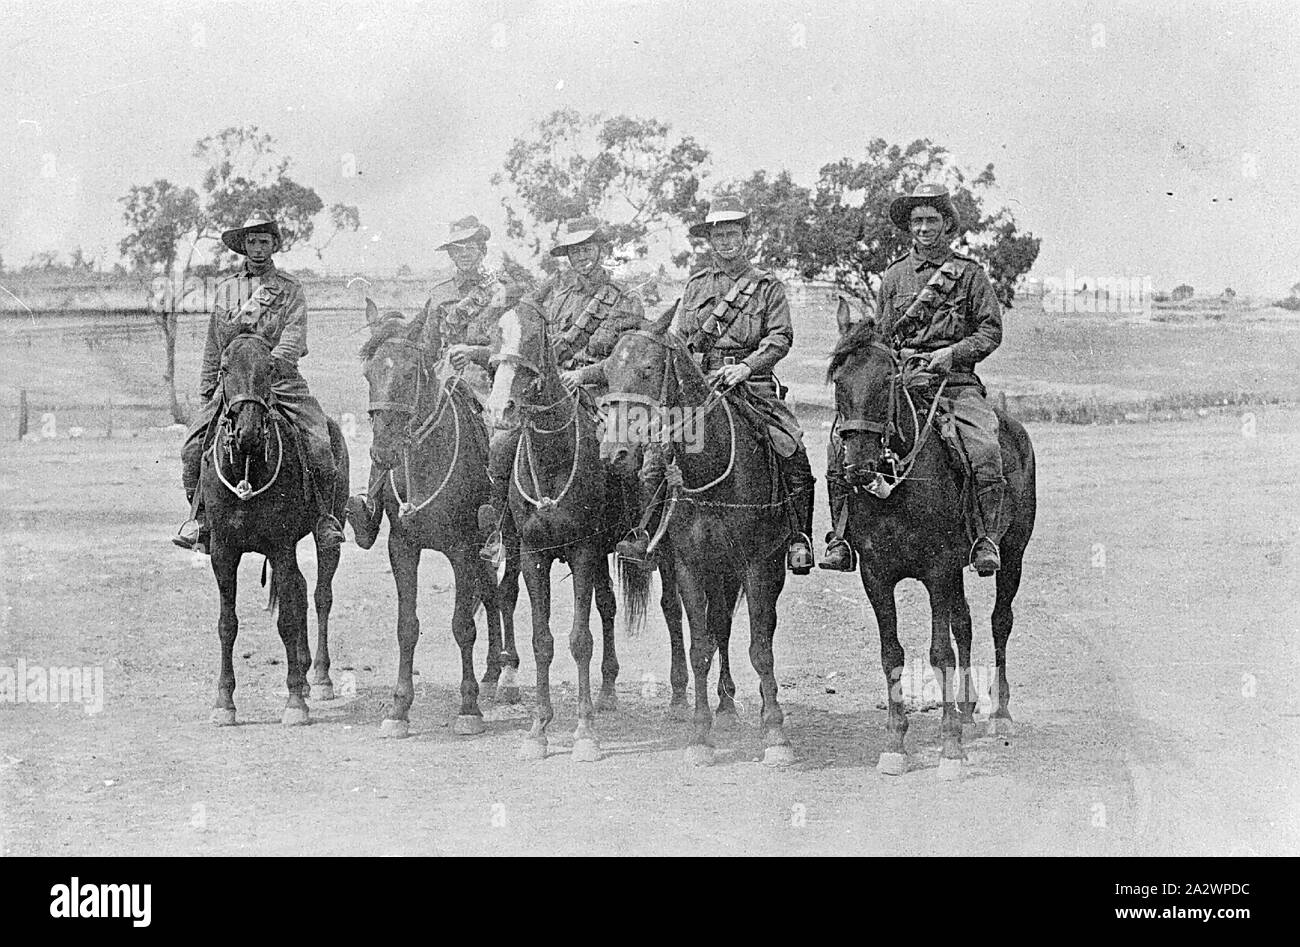 Negative - Ballarat District, Victoria, circa 1920, Five soldiers of the light horse brigade on horseback Stock Photo